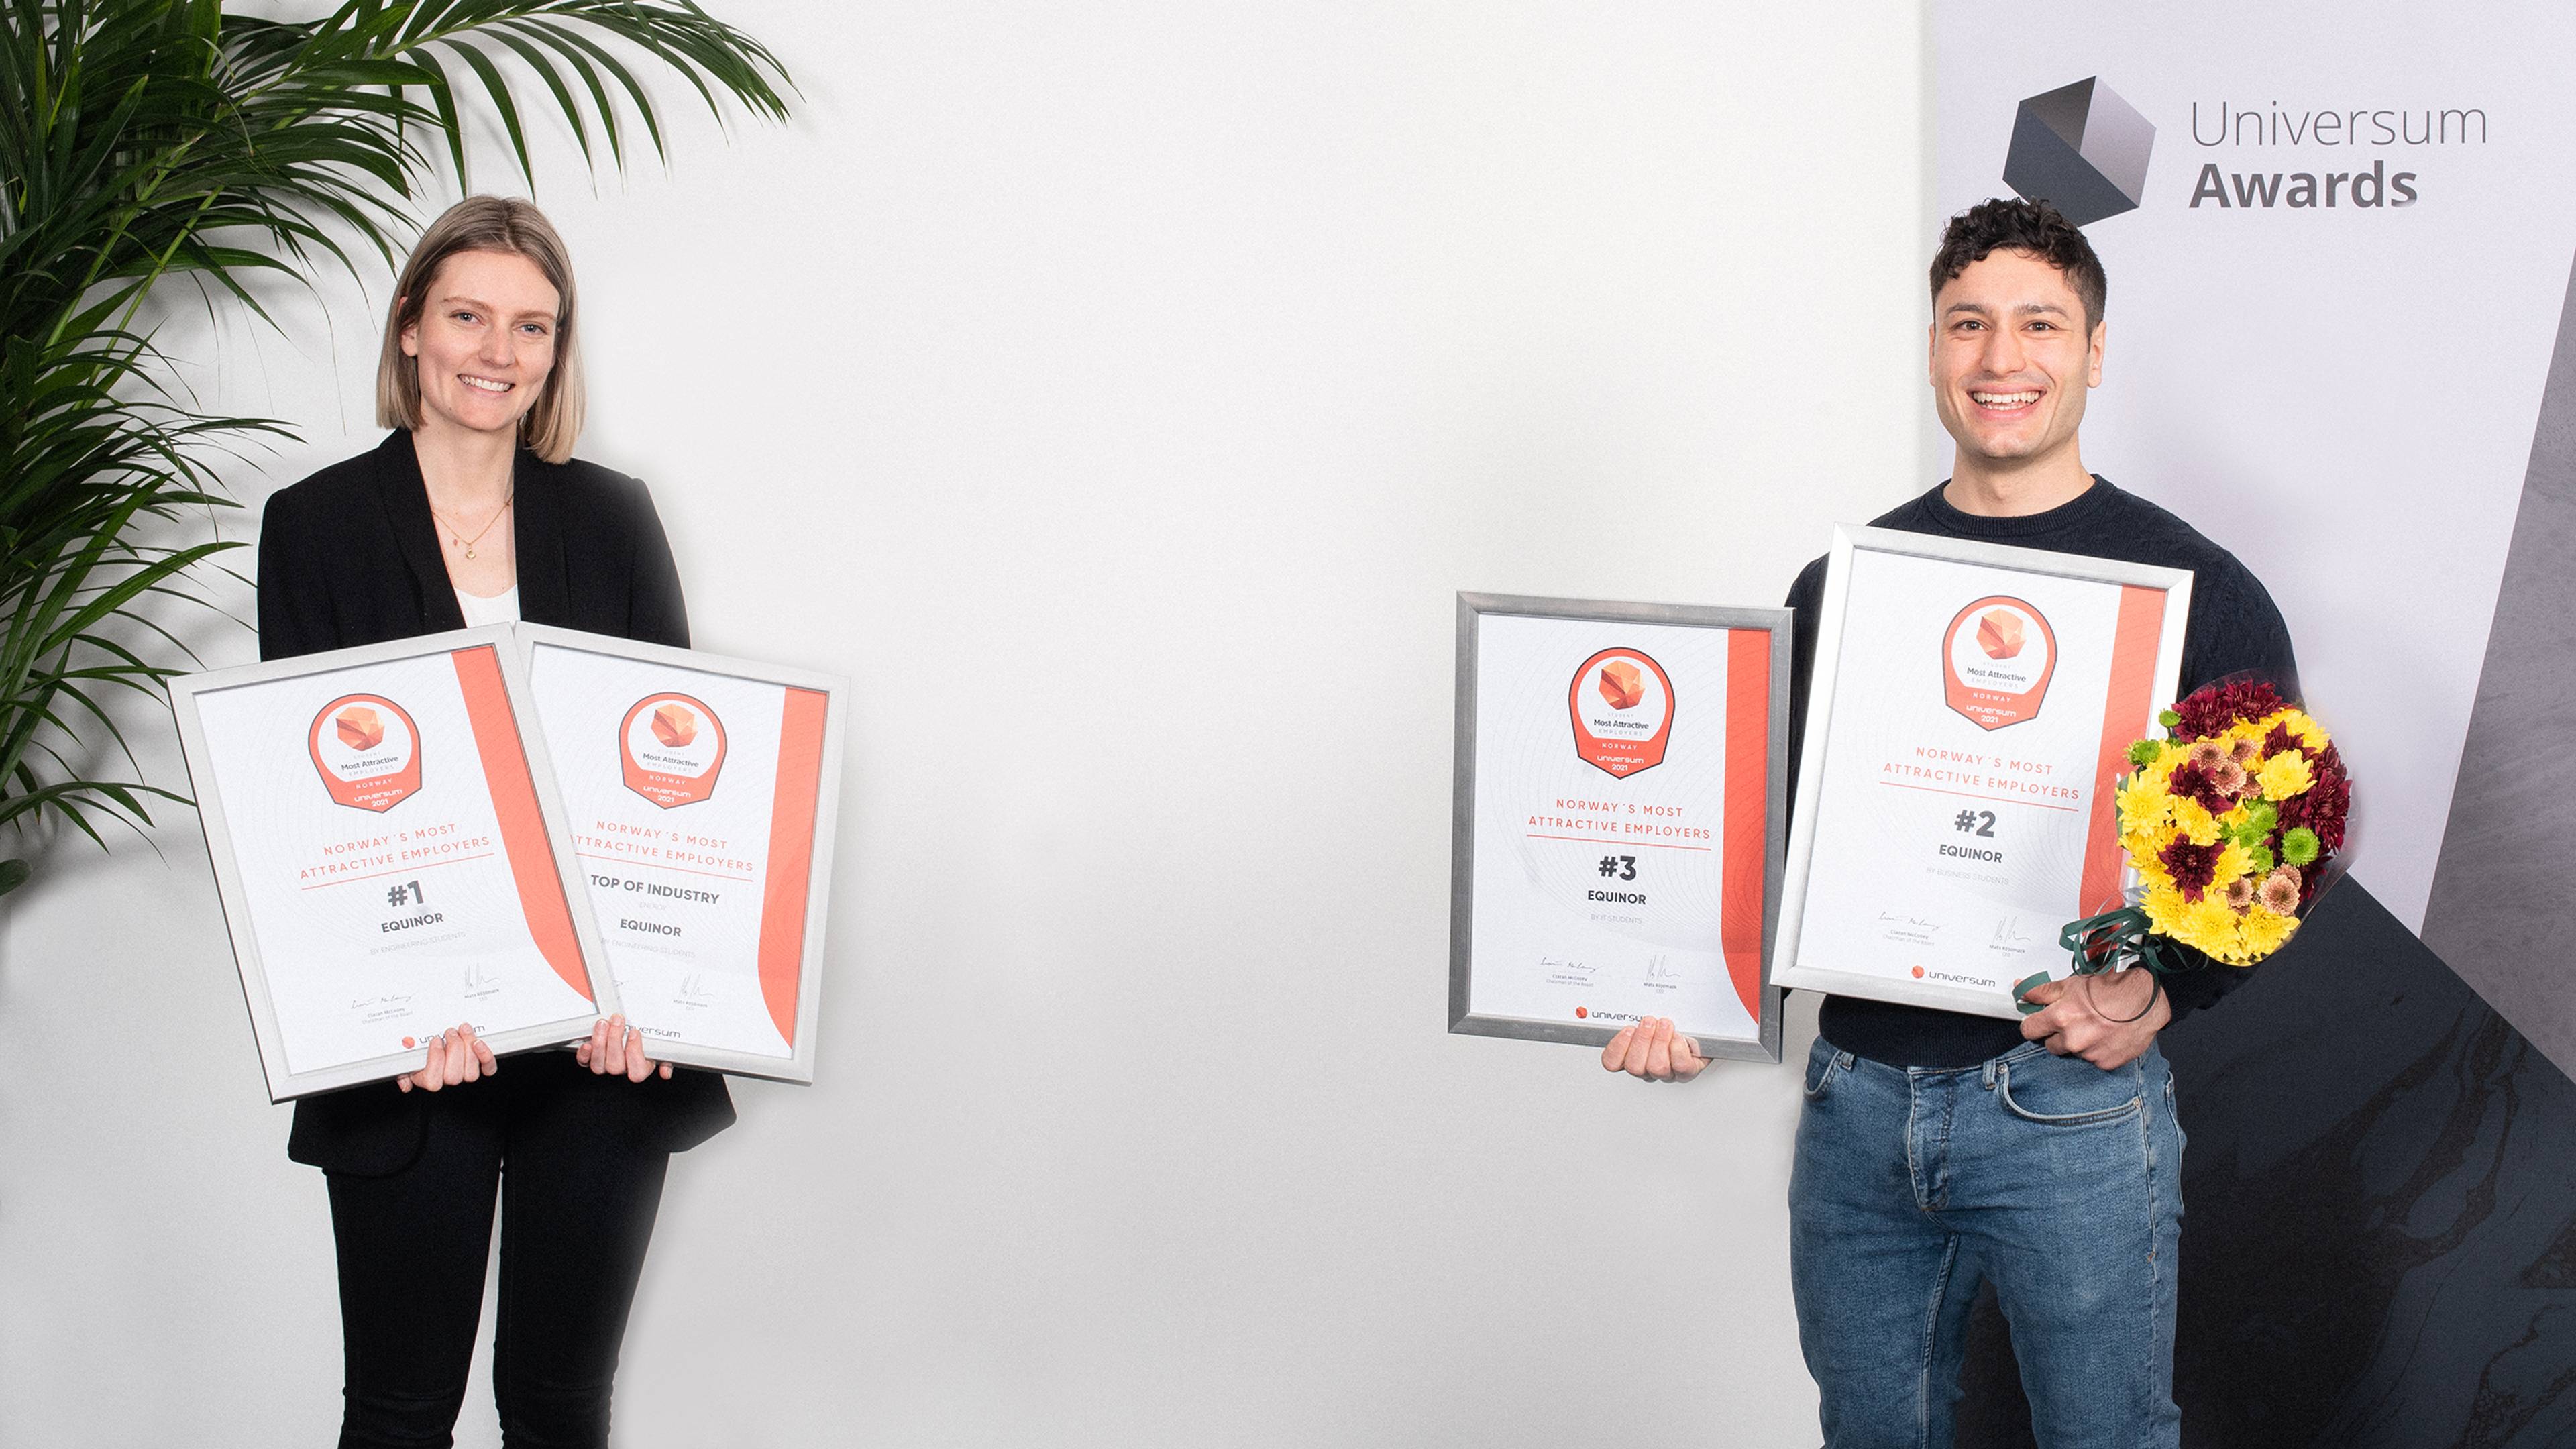 Tamara Solaja & Daniel Sander Isaksen receiving the Universum awards